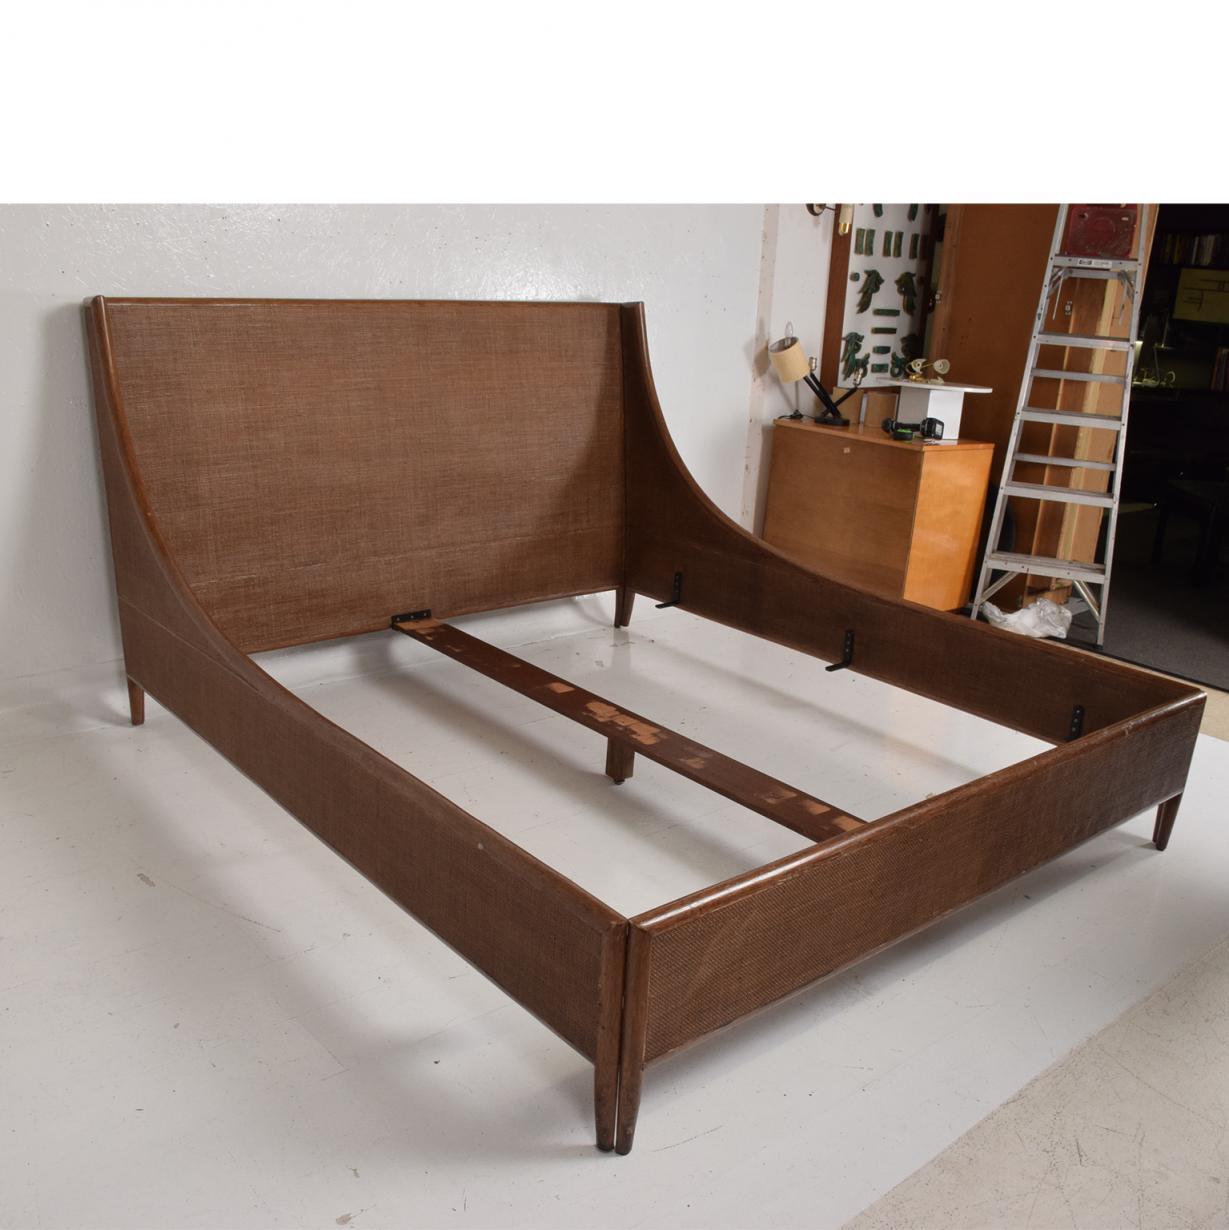 mid century modern bed frame king